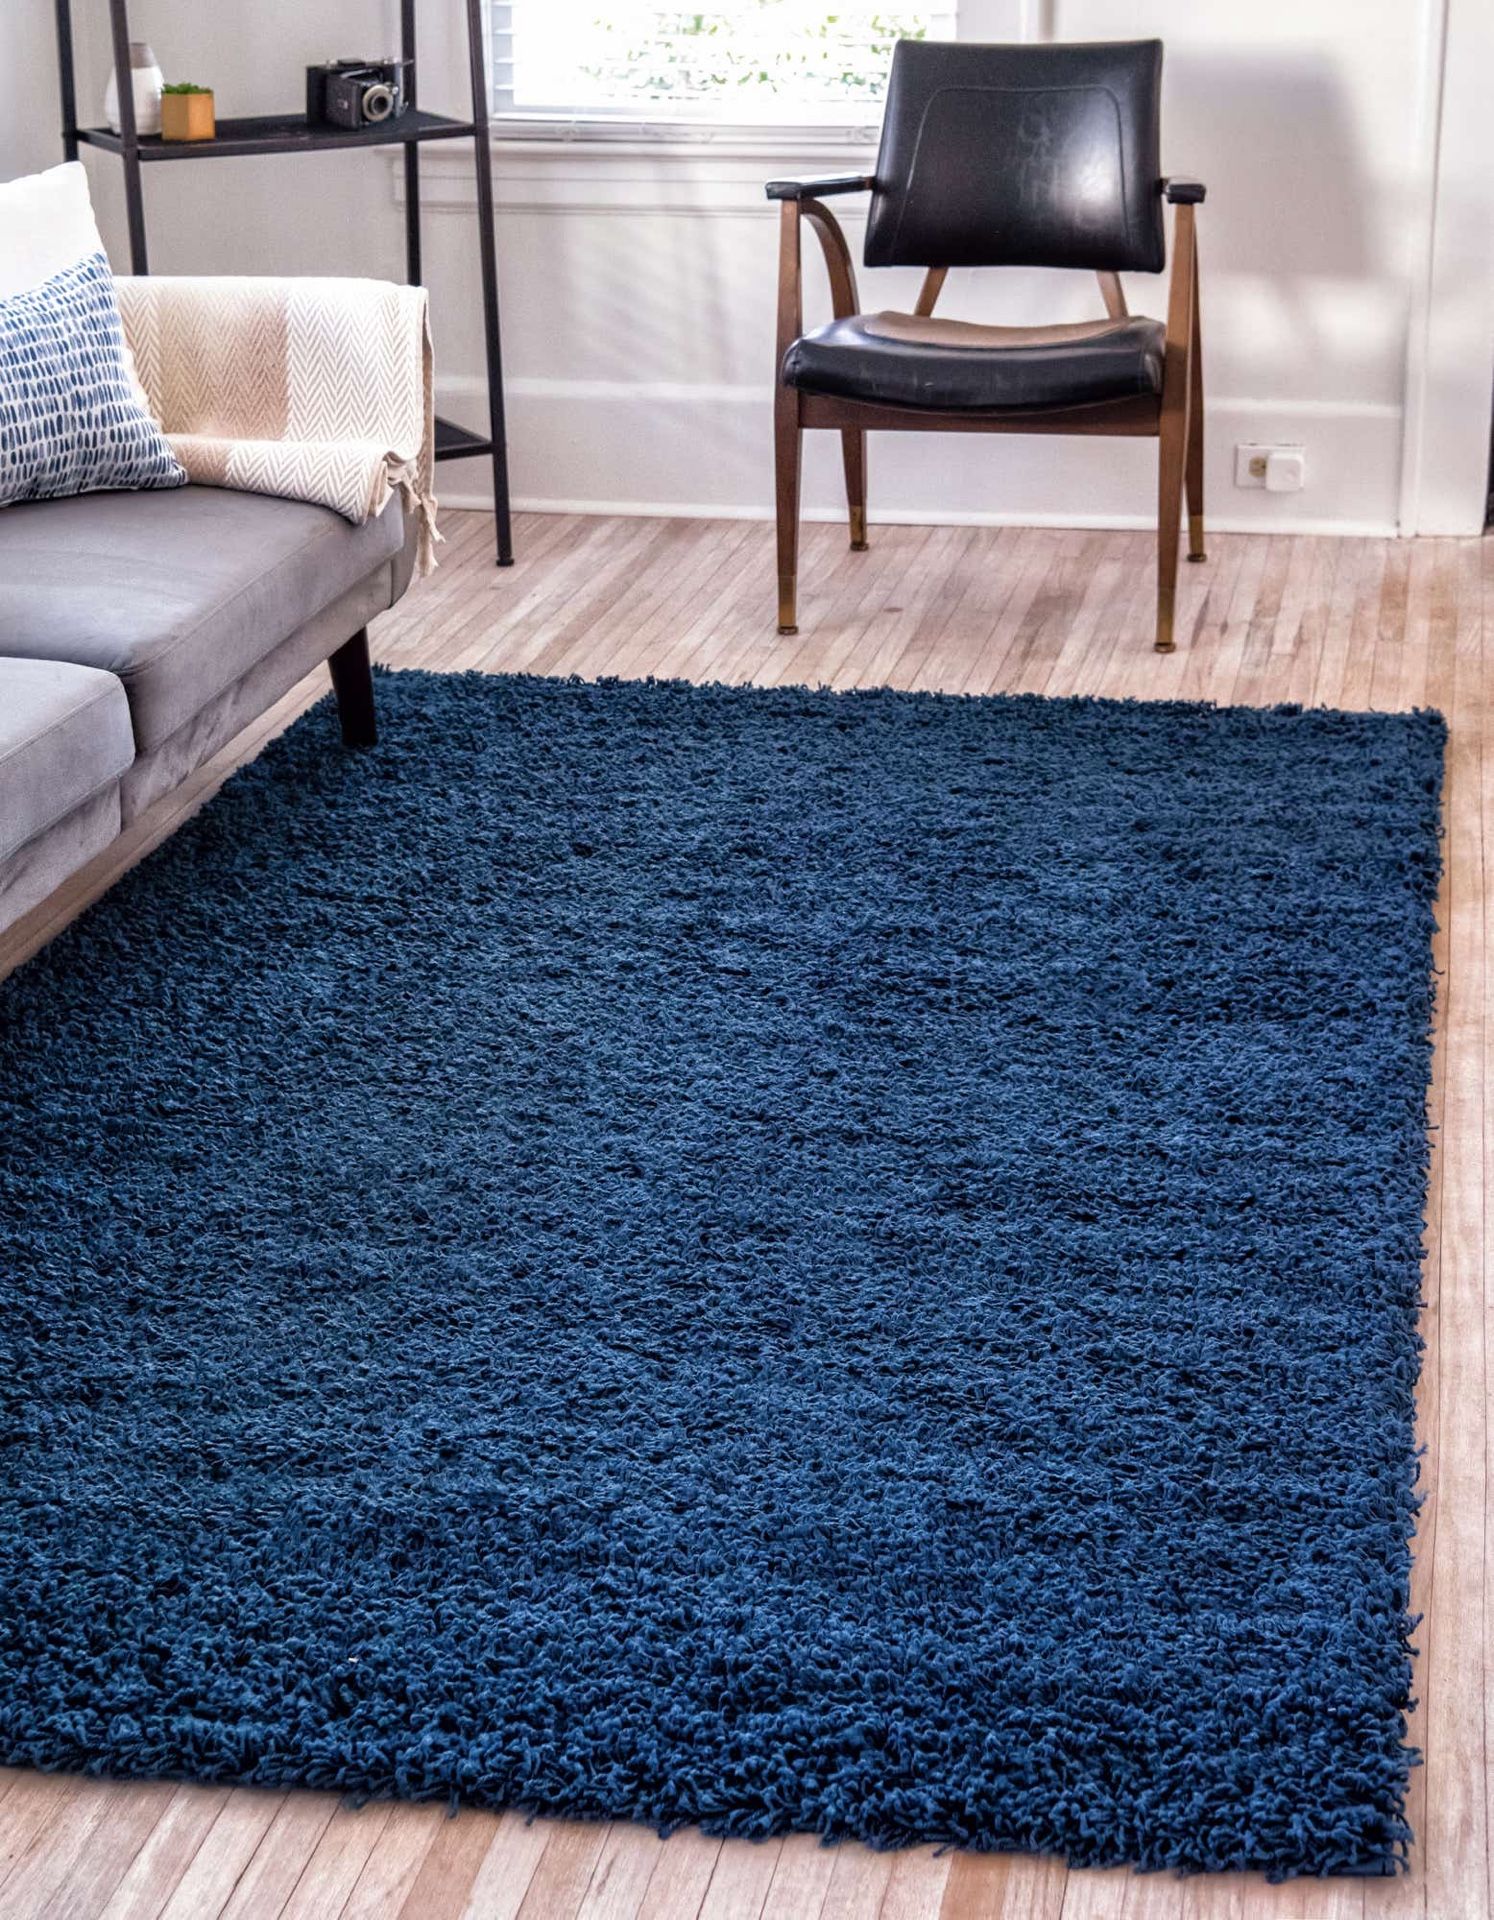 New blue shaggy rug size 5x8 high quality shags carpet